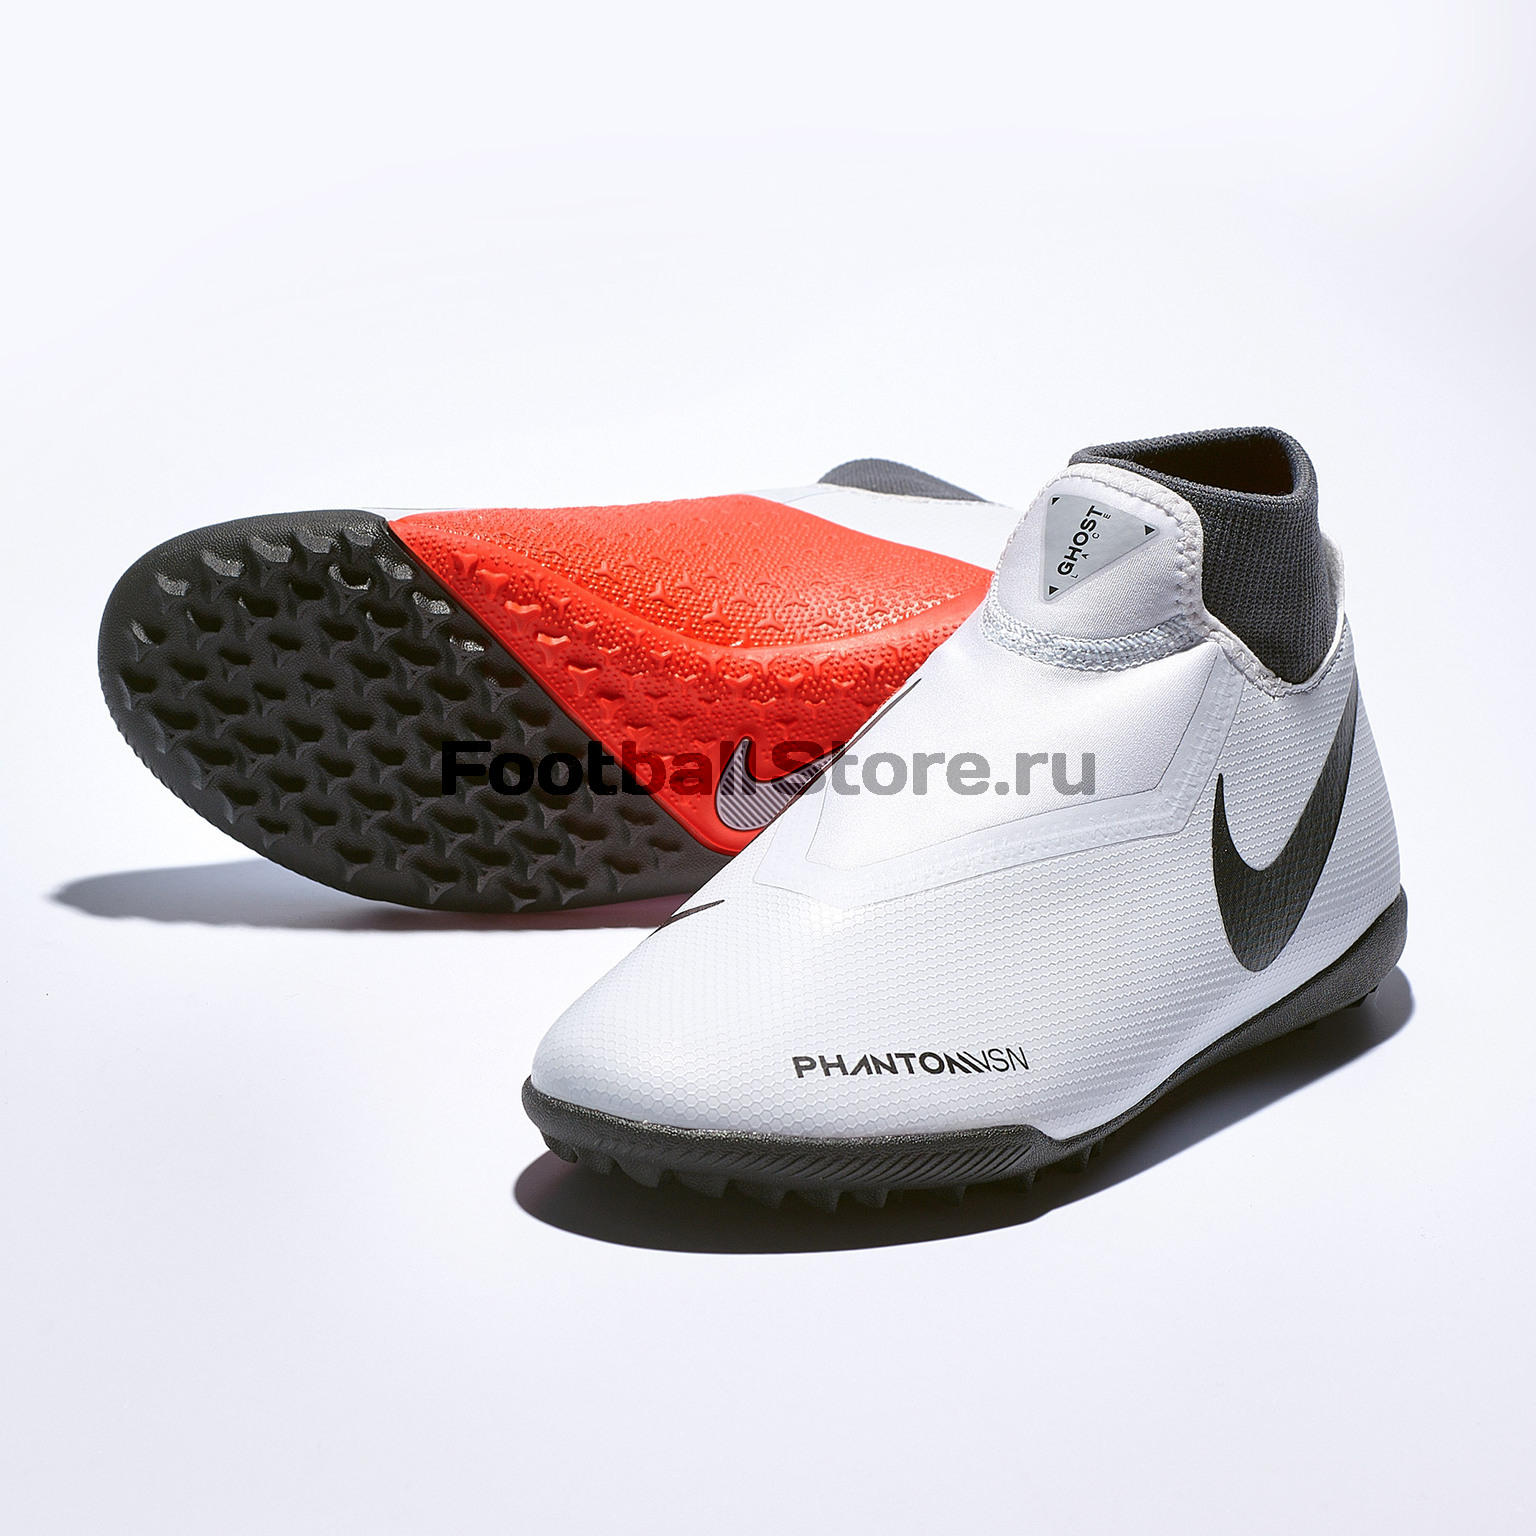 Шиповки Nike Phantom X 3 Academy DF TF AO3269-060